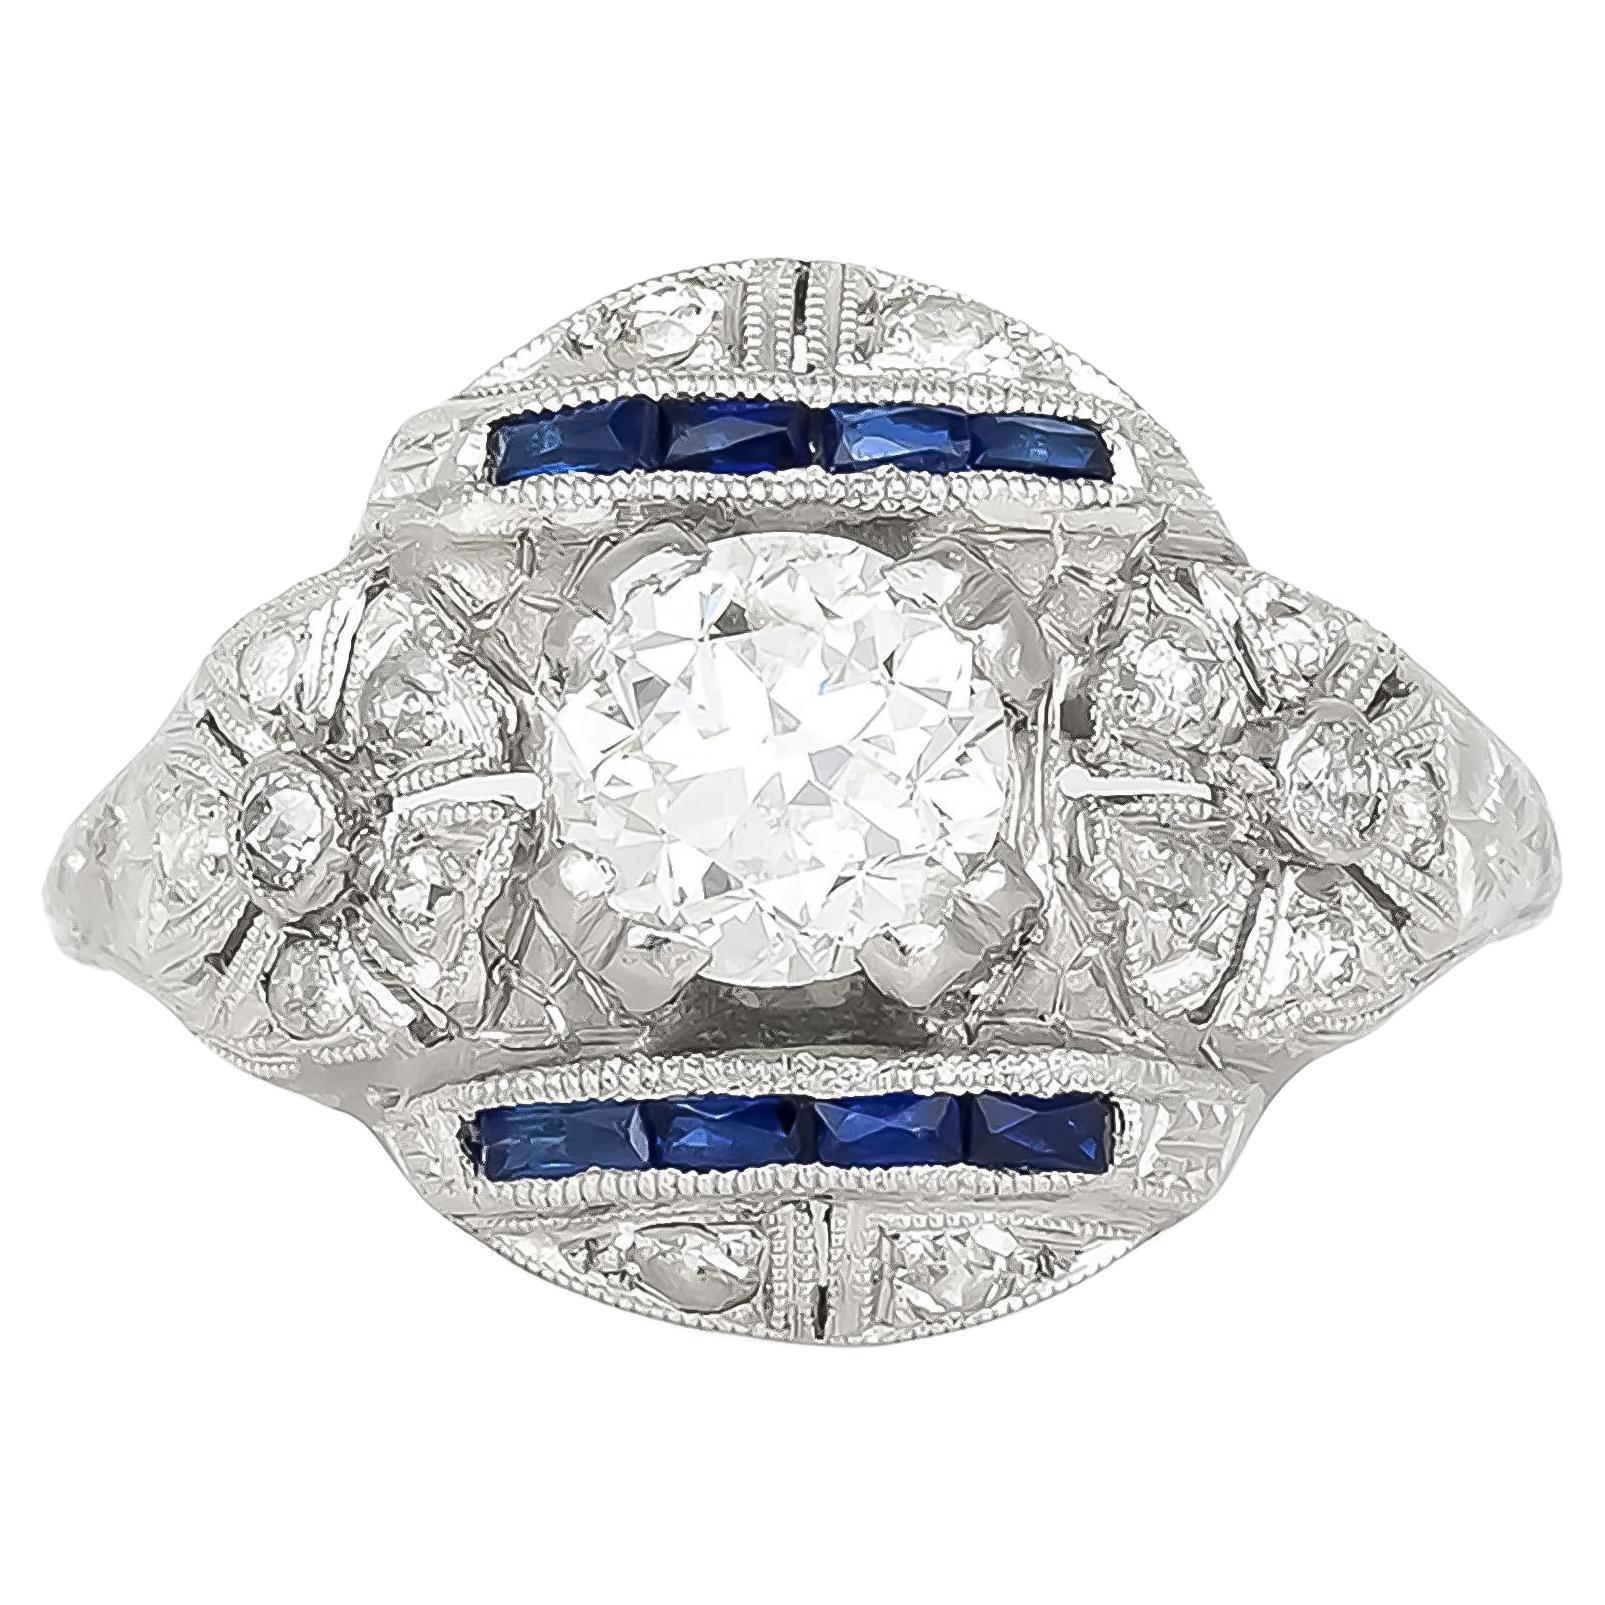 Antique Art Deco 1.00 Carat Diamond Engagement Ring with Sapphires For Sale